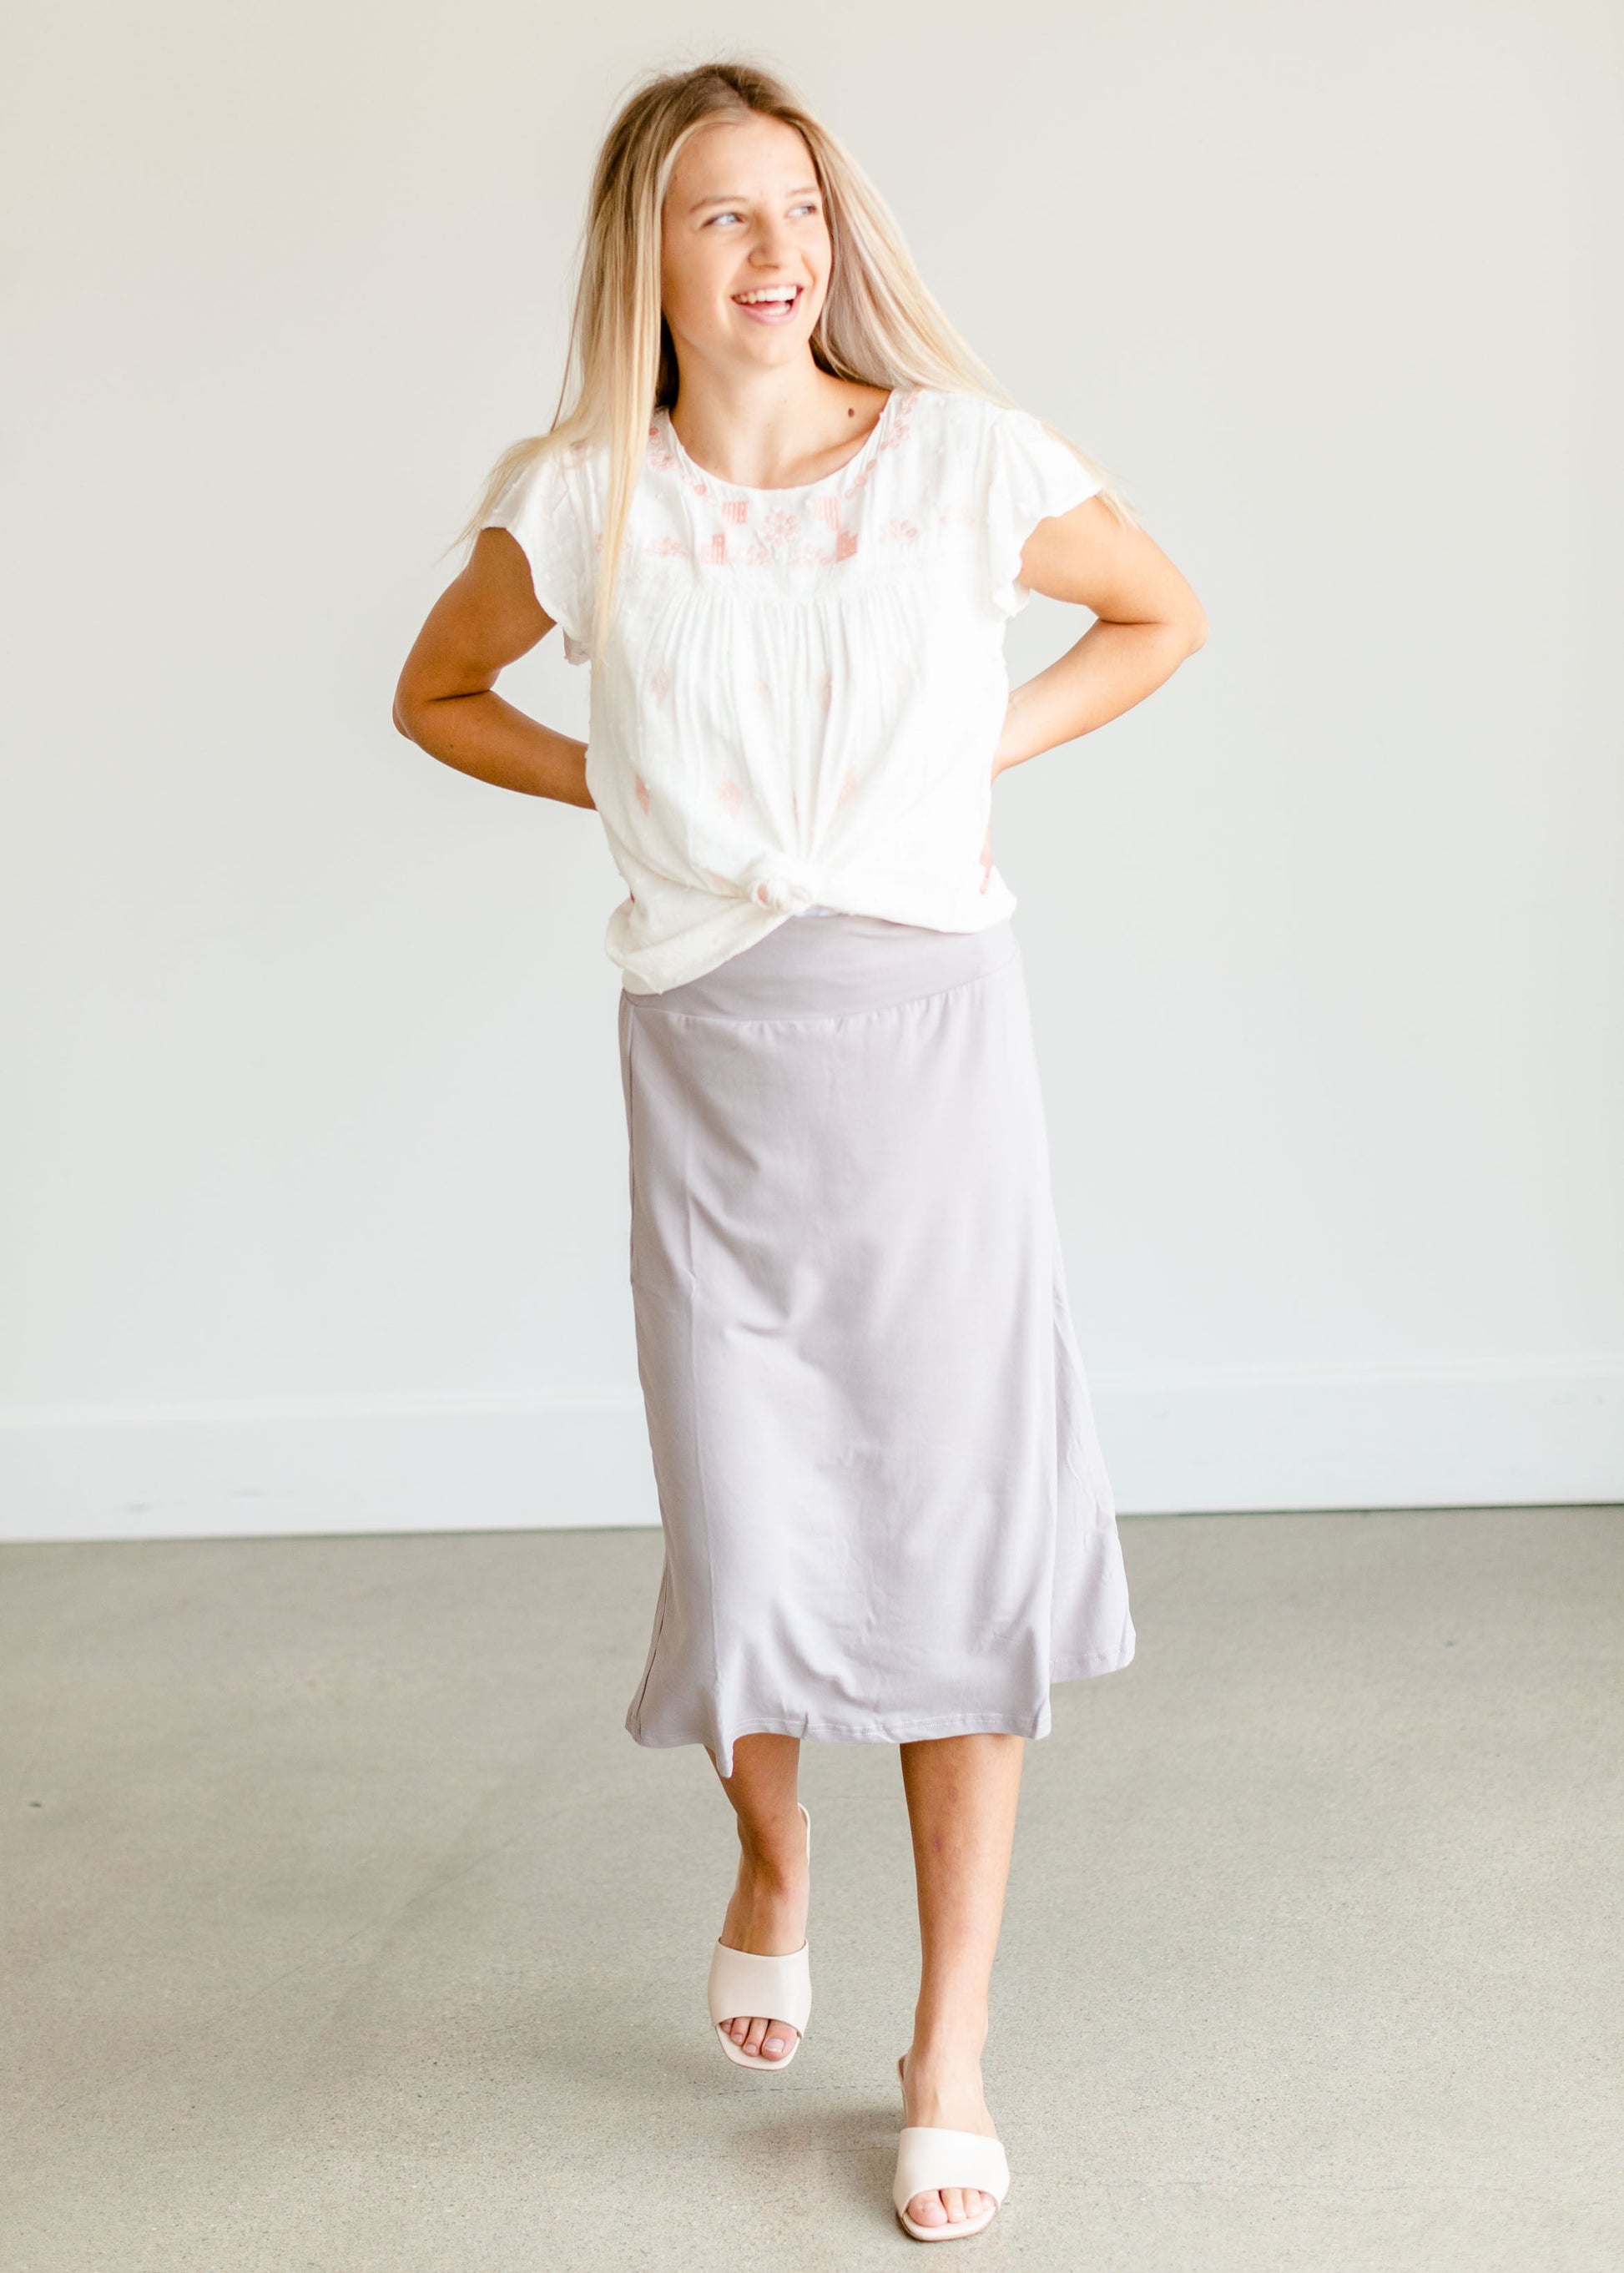 Emily Gray Knit Midi Skirt - FINAL SALE Skirts